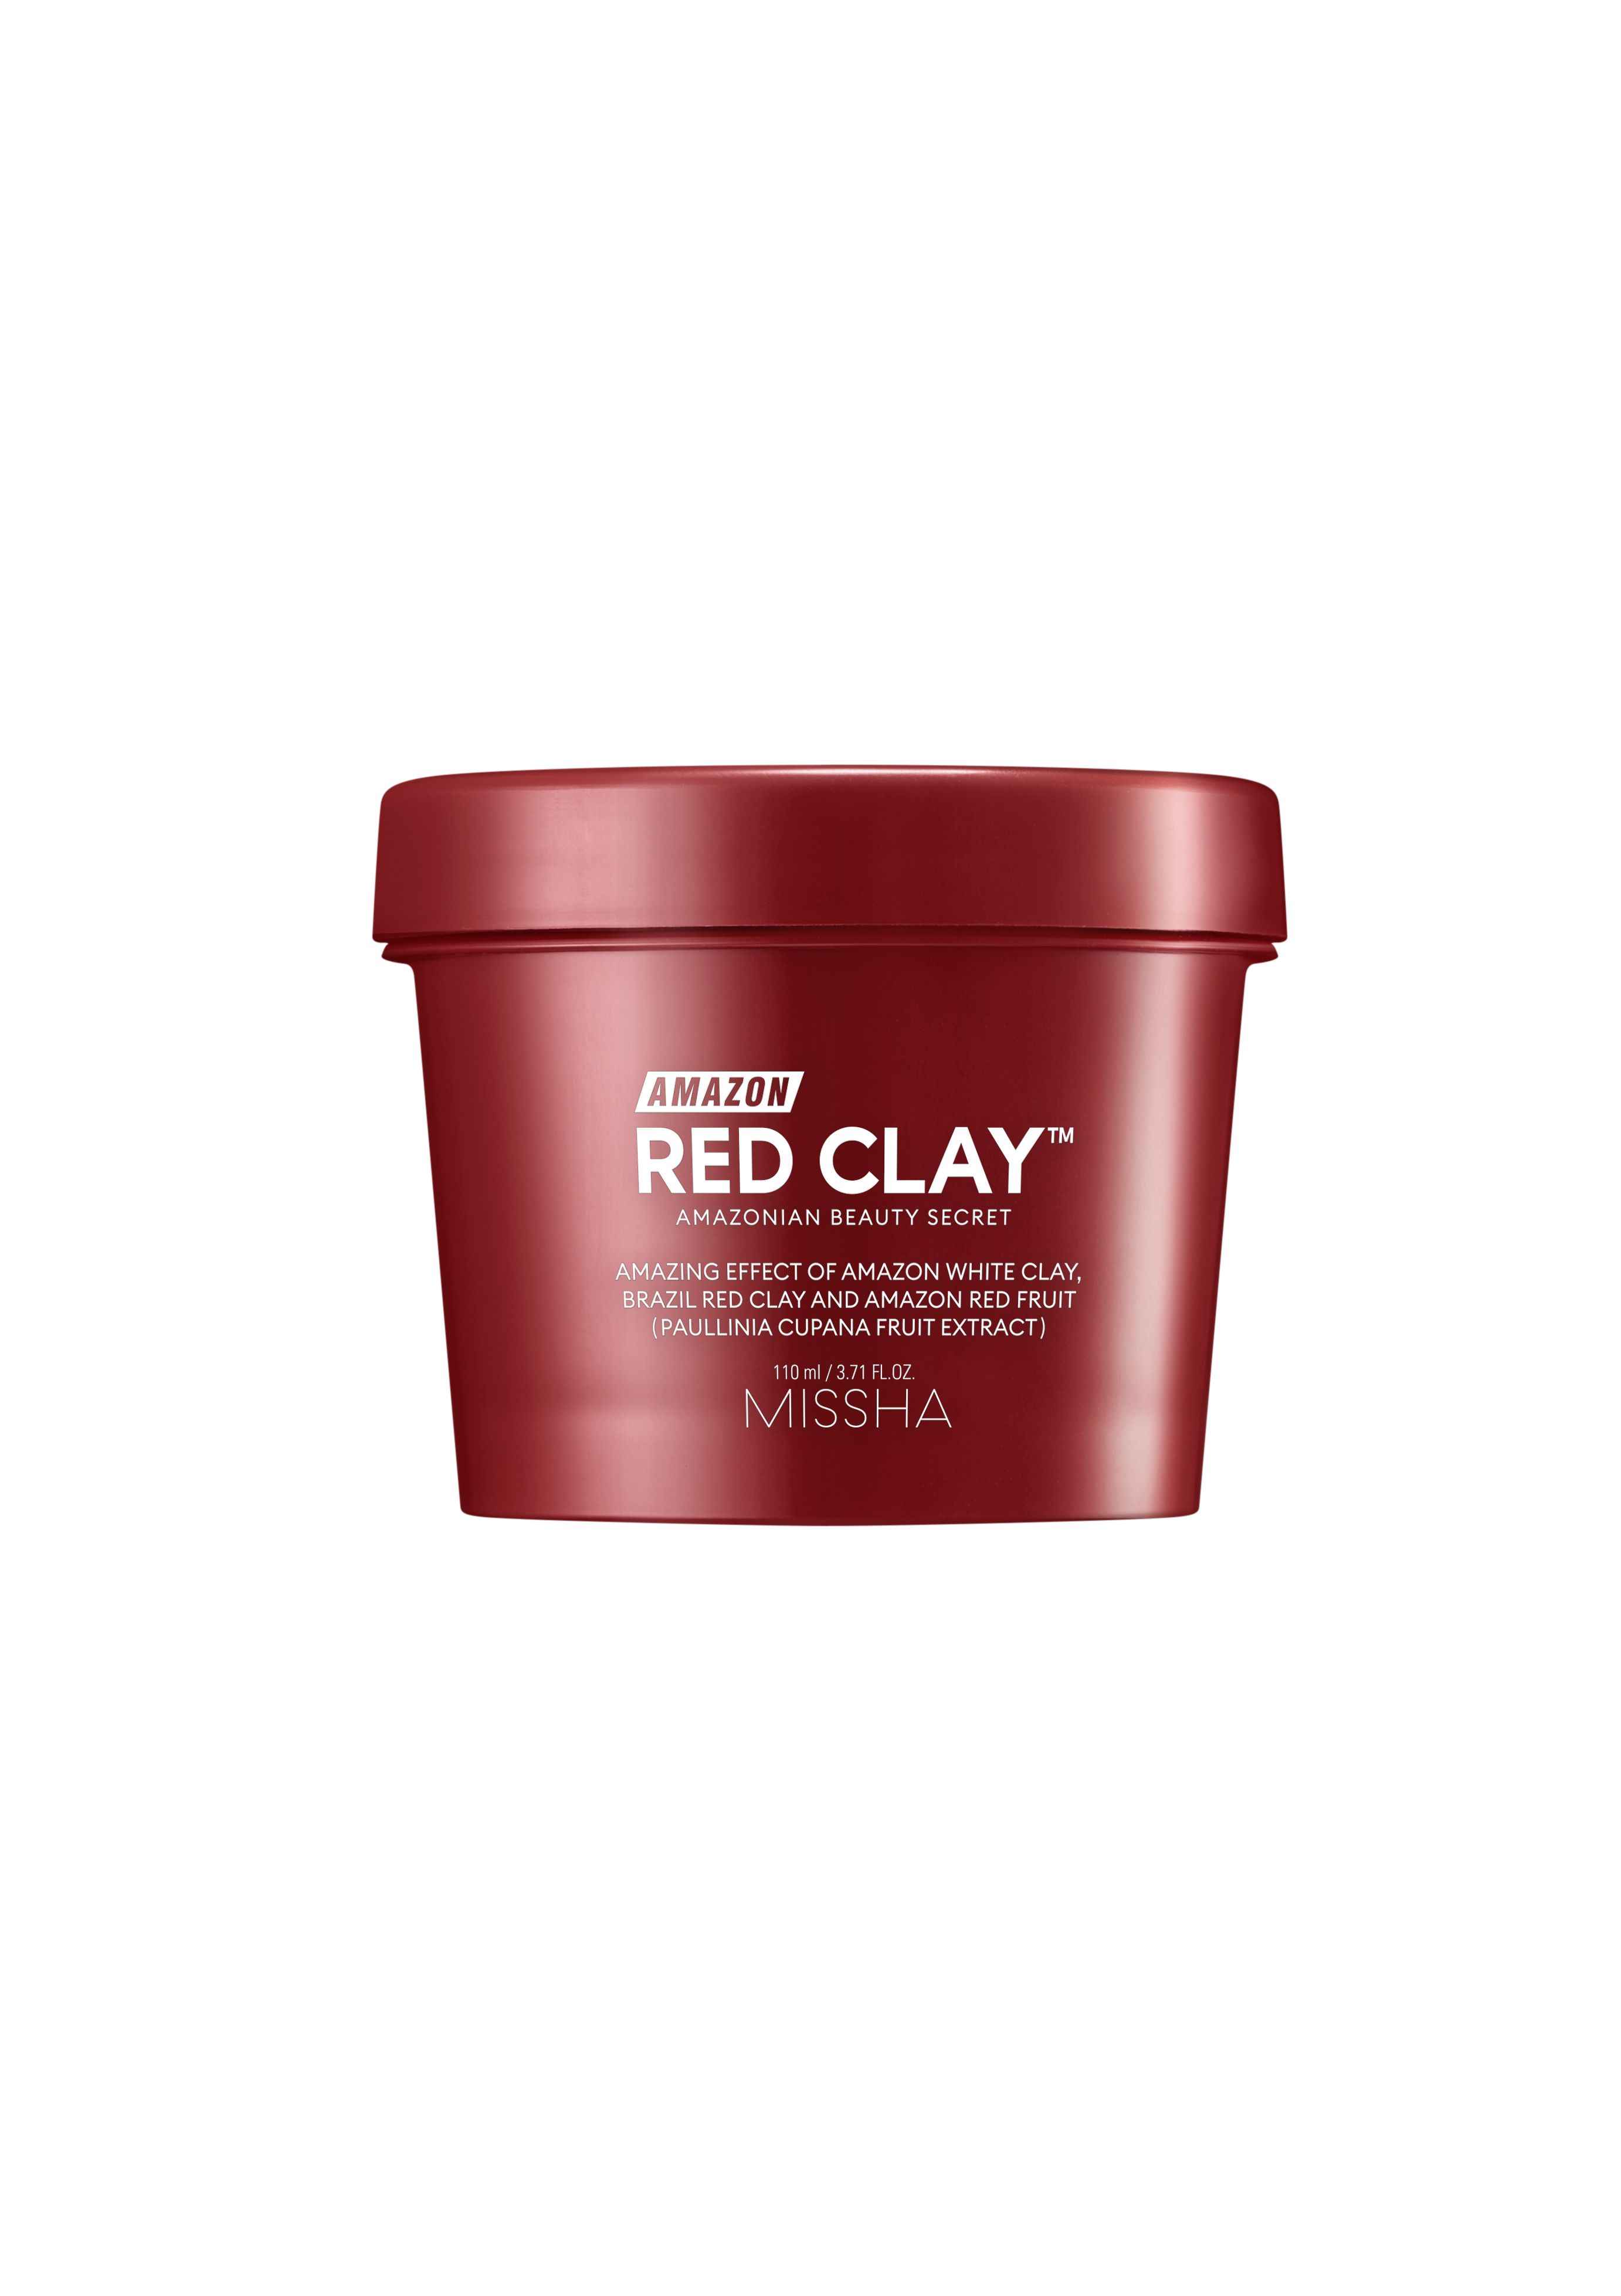 Missha Amazon Red Clay™Pore Mask 110 ml